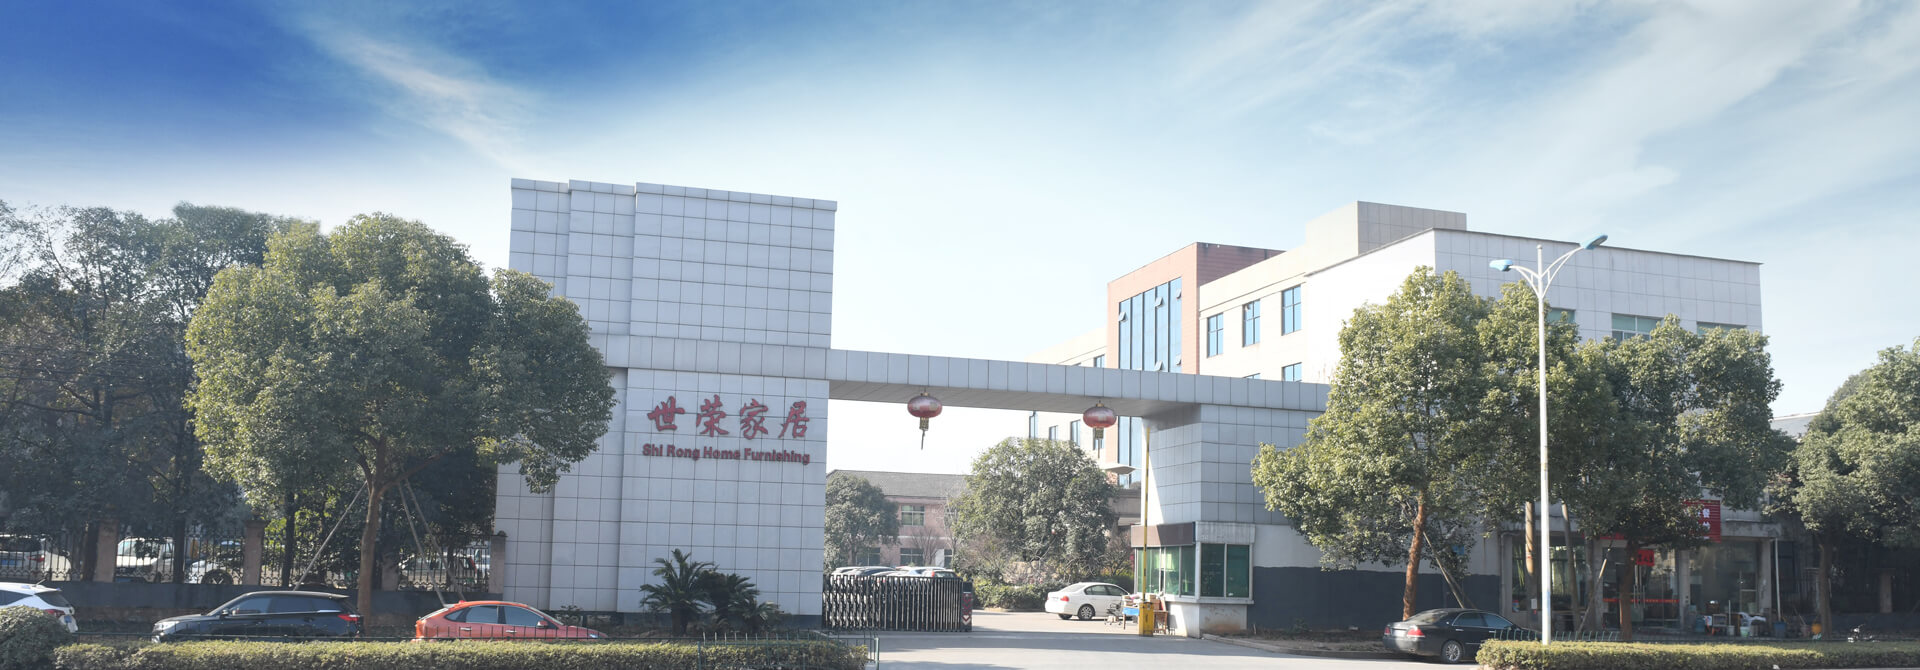 Wuyi Shirong Home Supplies Co., Ltd